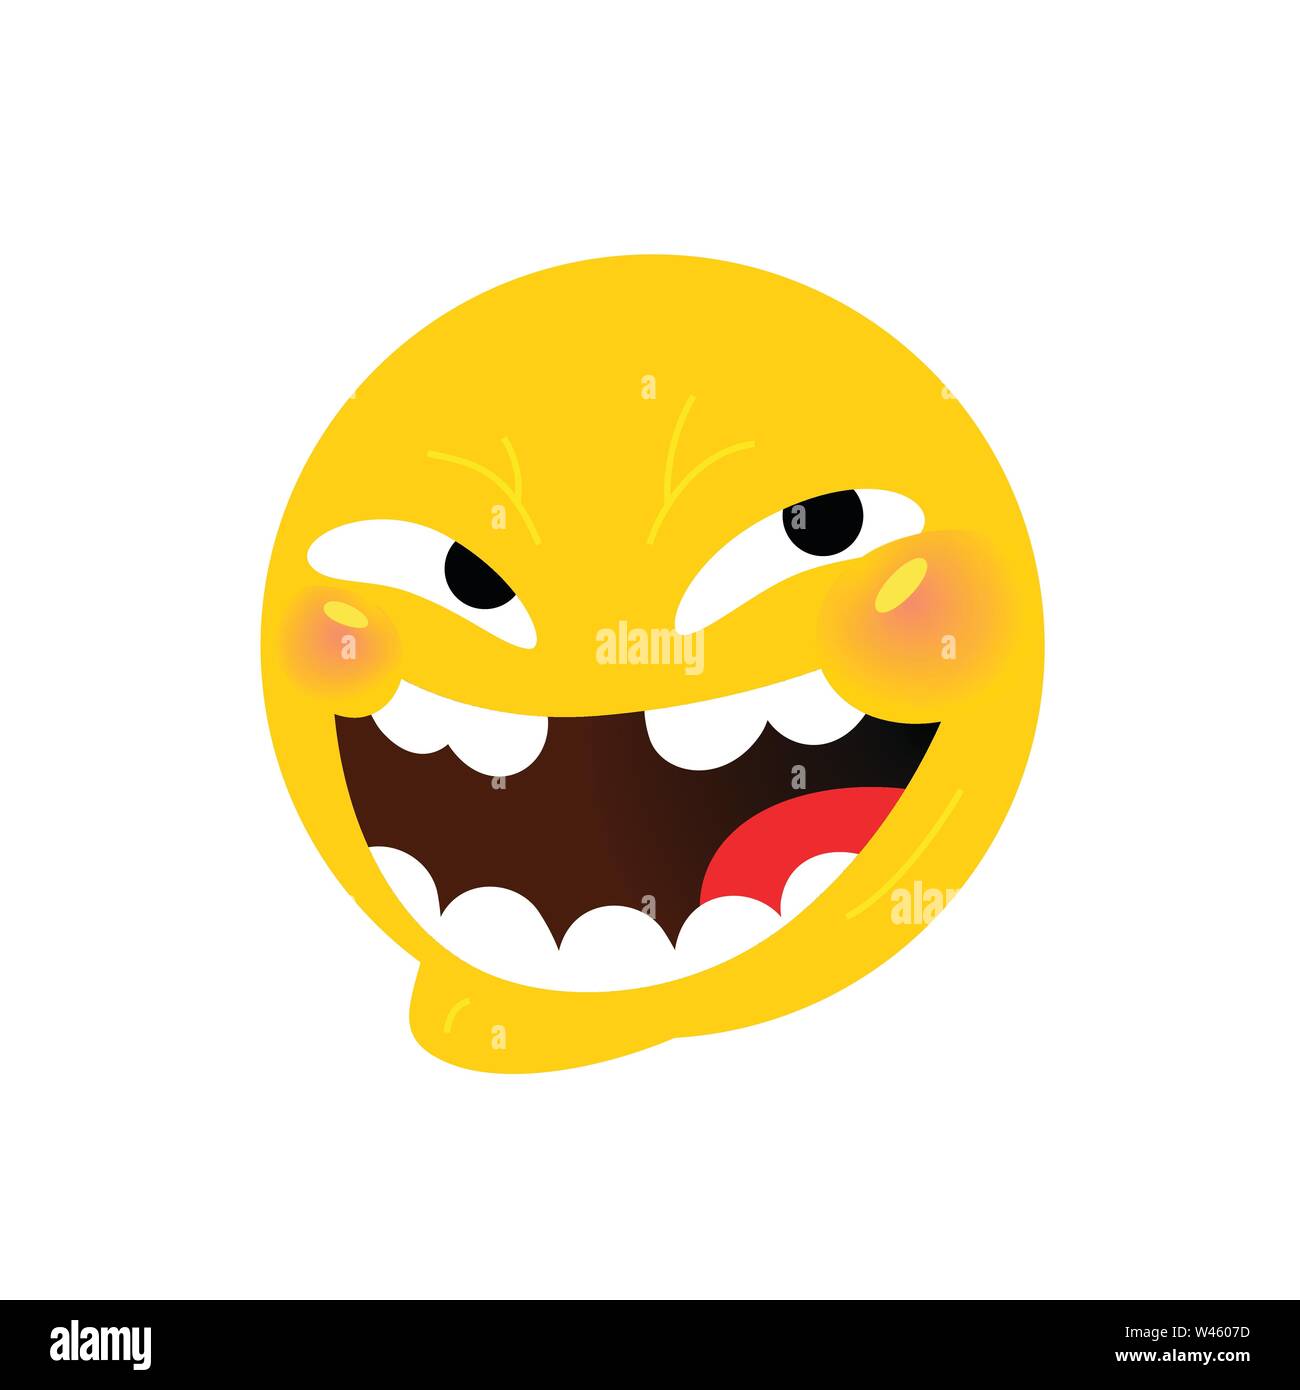 Internet meme trollface design Royalty Free Vector Image